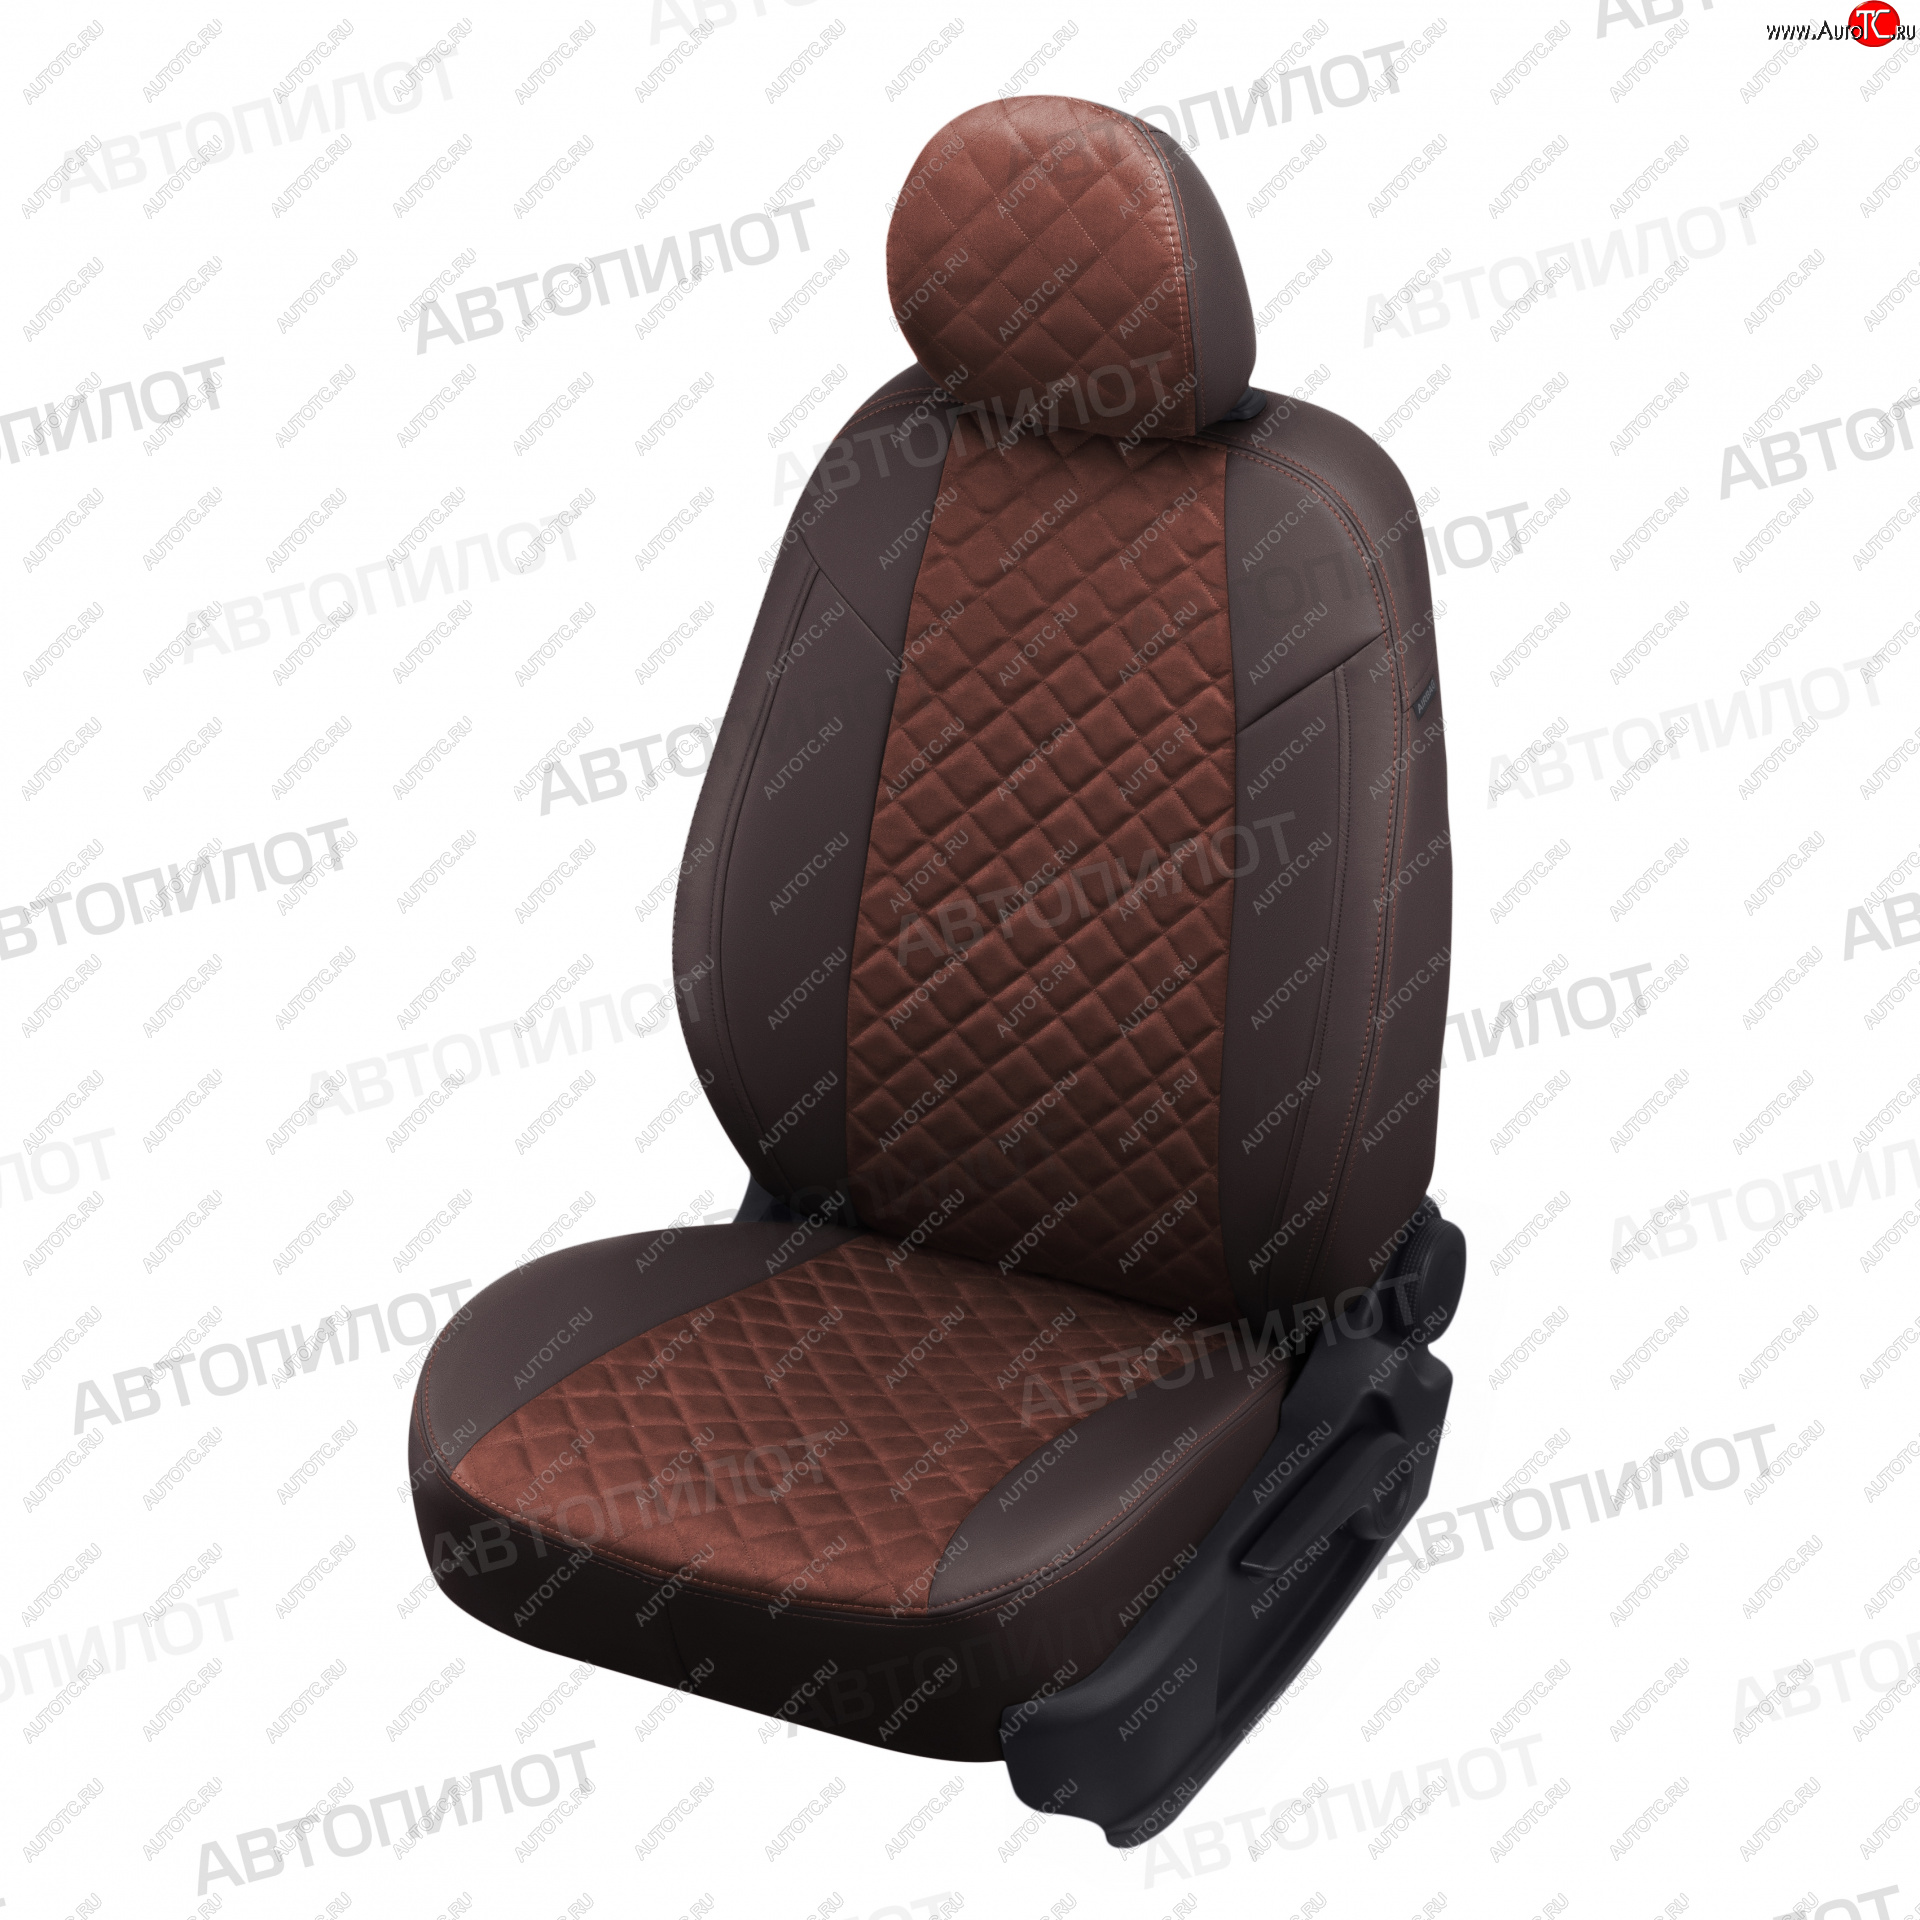 22 299 р. Чехлы сидений (9 мест, экокожа/алькантара) Автопилот Ромб  Ford Transit  4 (2014-2024) (шоколад)